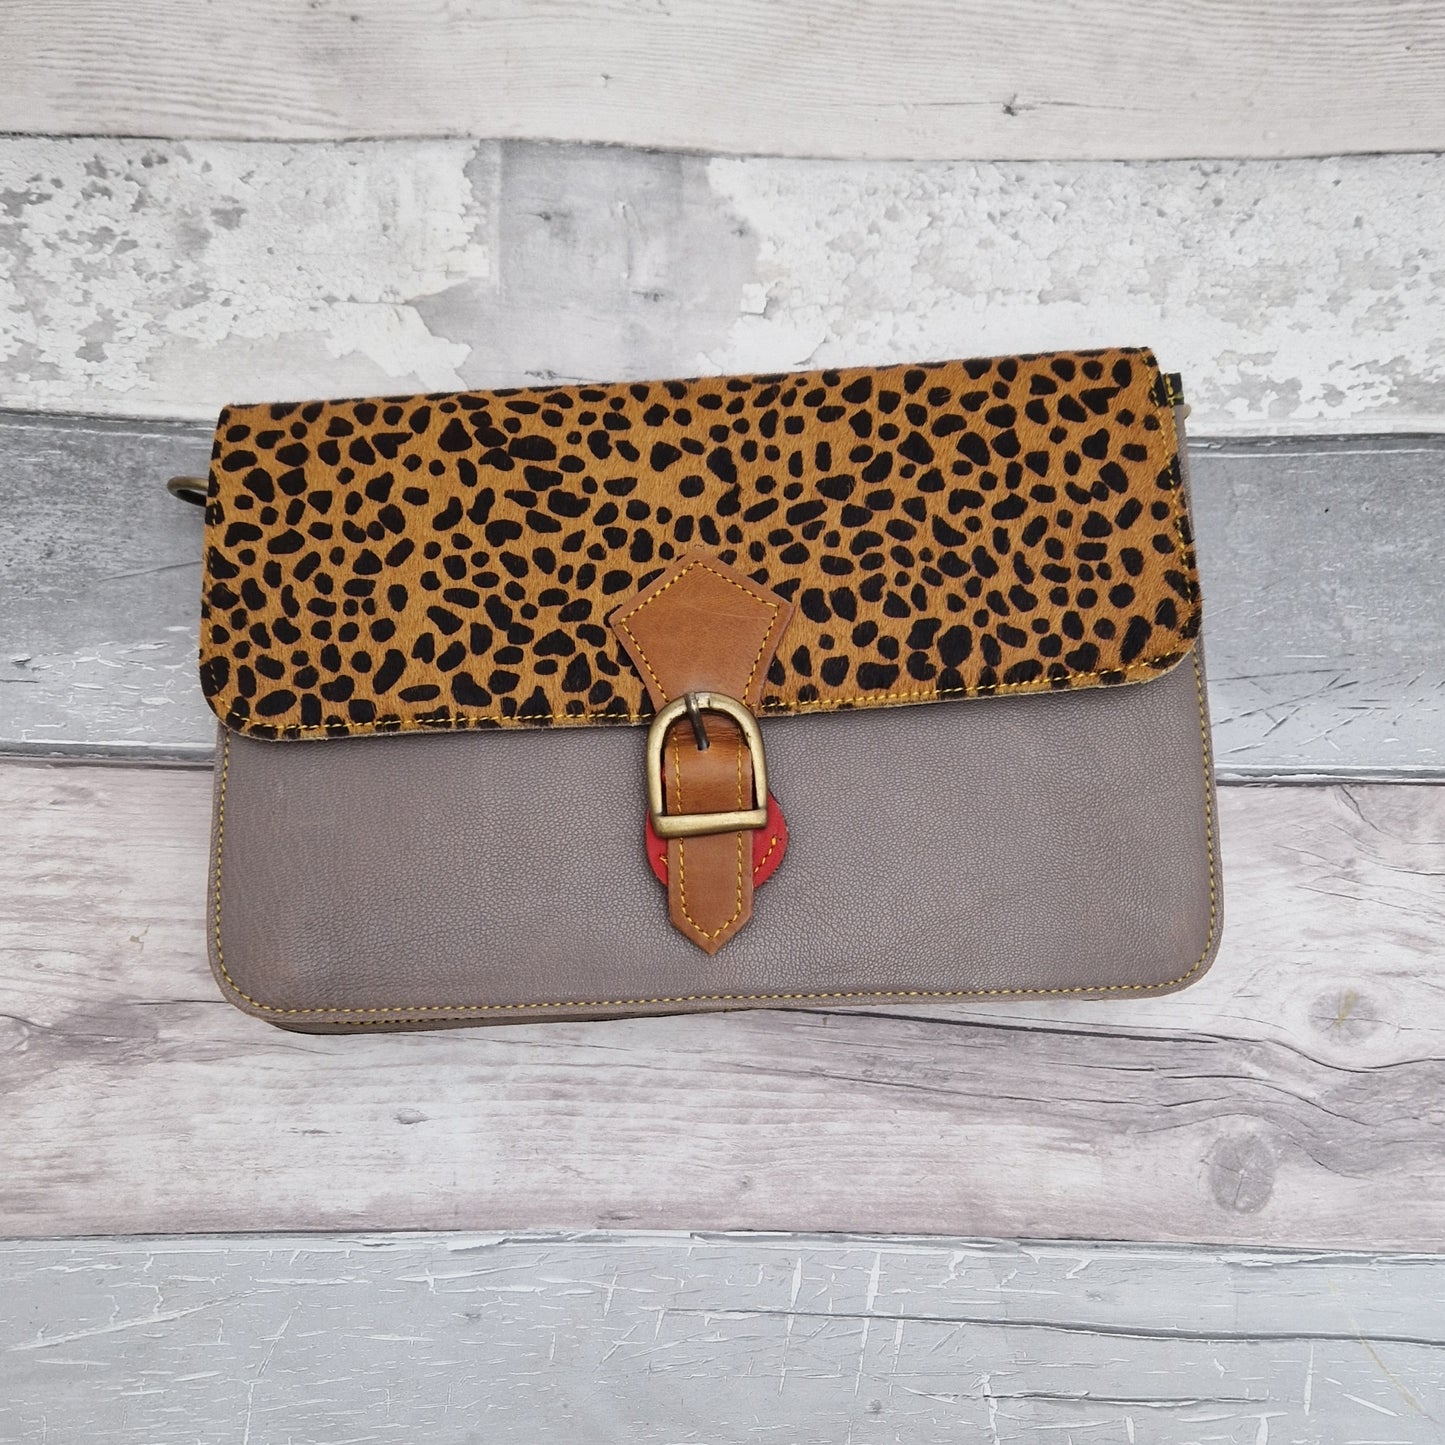 Grey leather handbag featuring a textured Cheetah print panel.